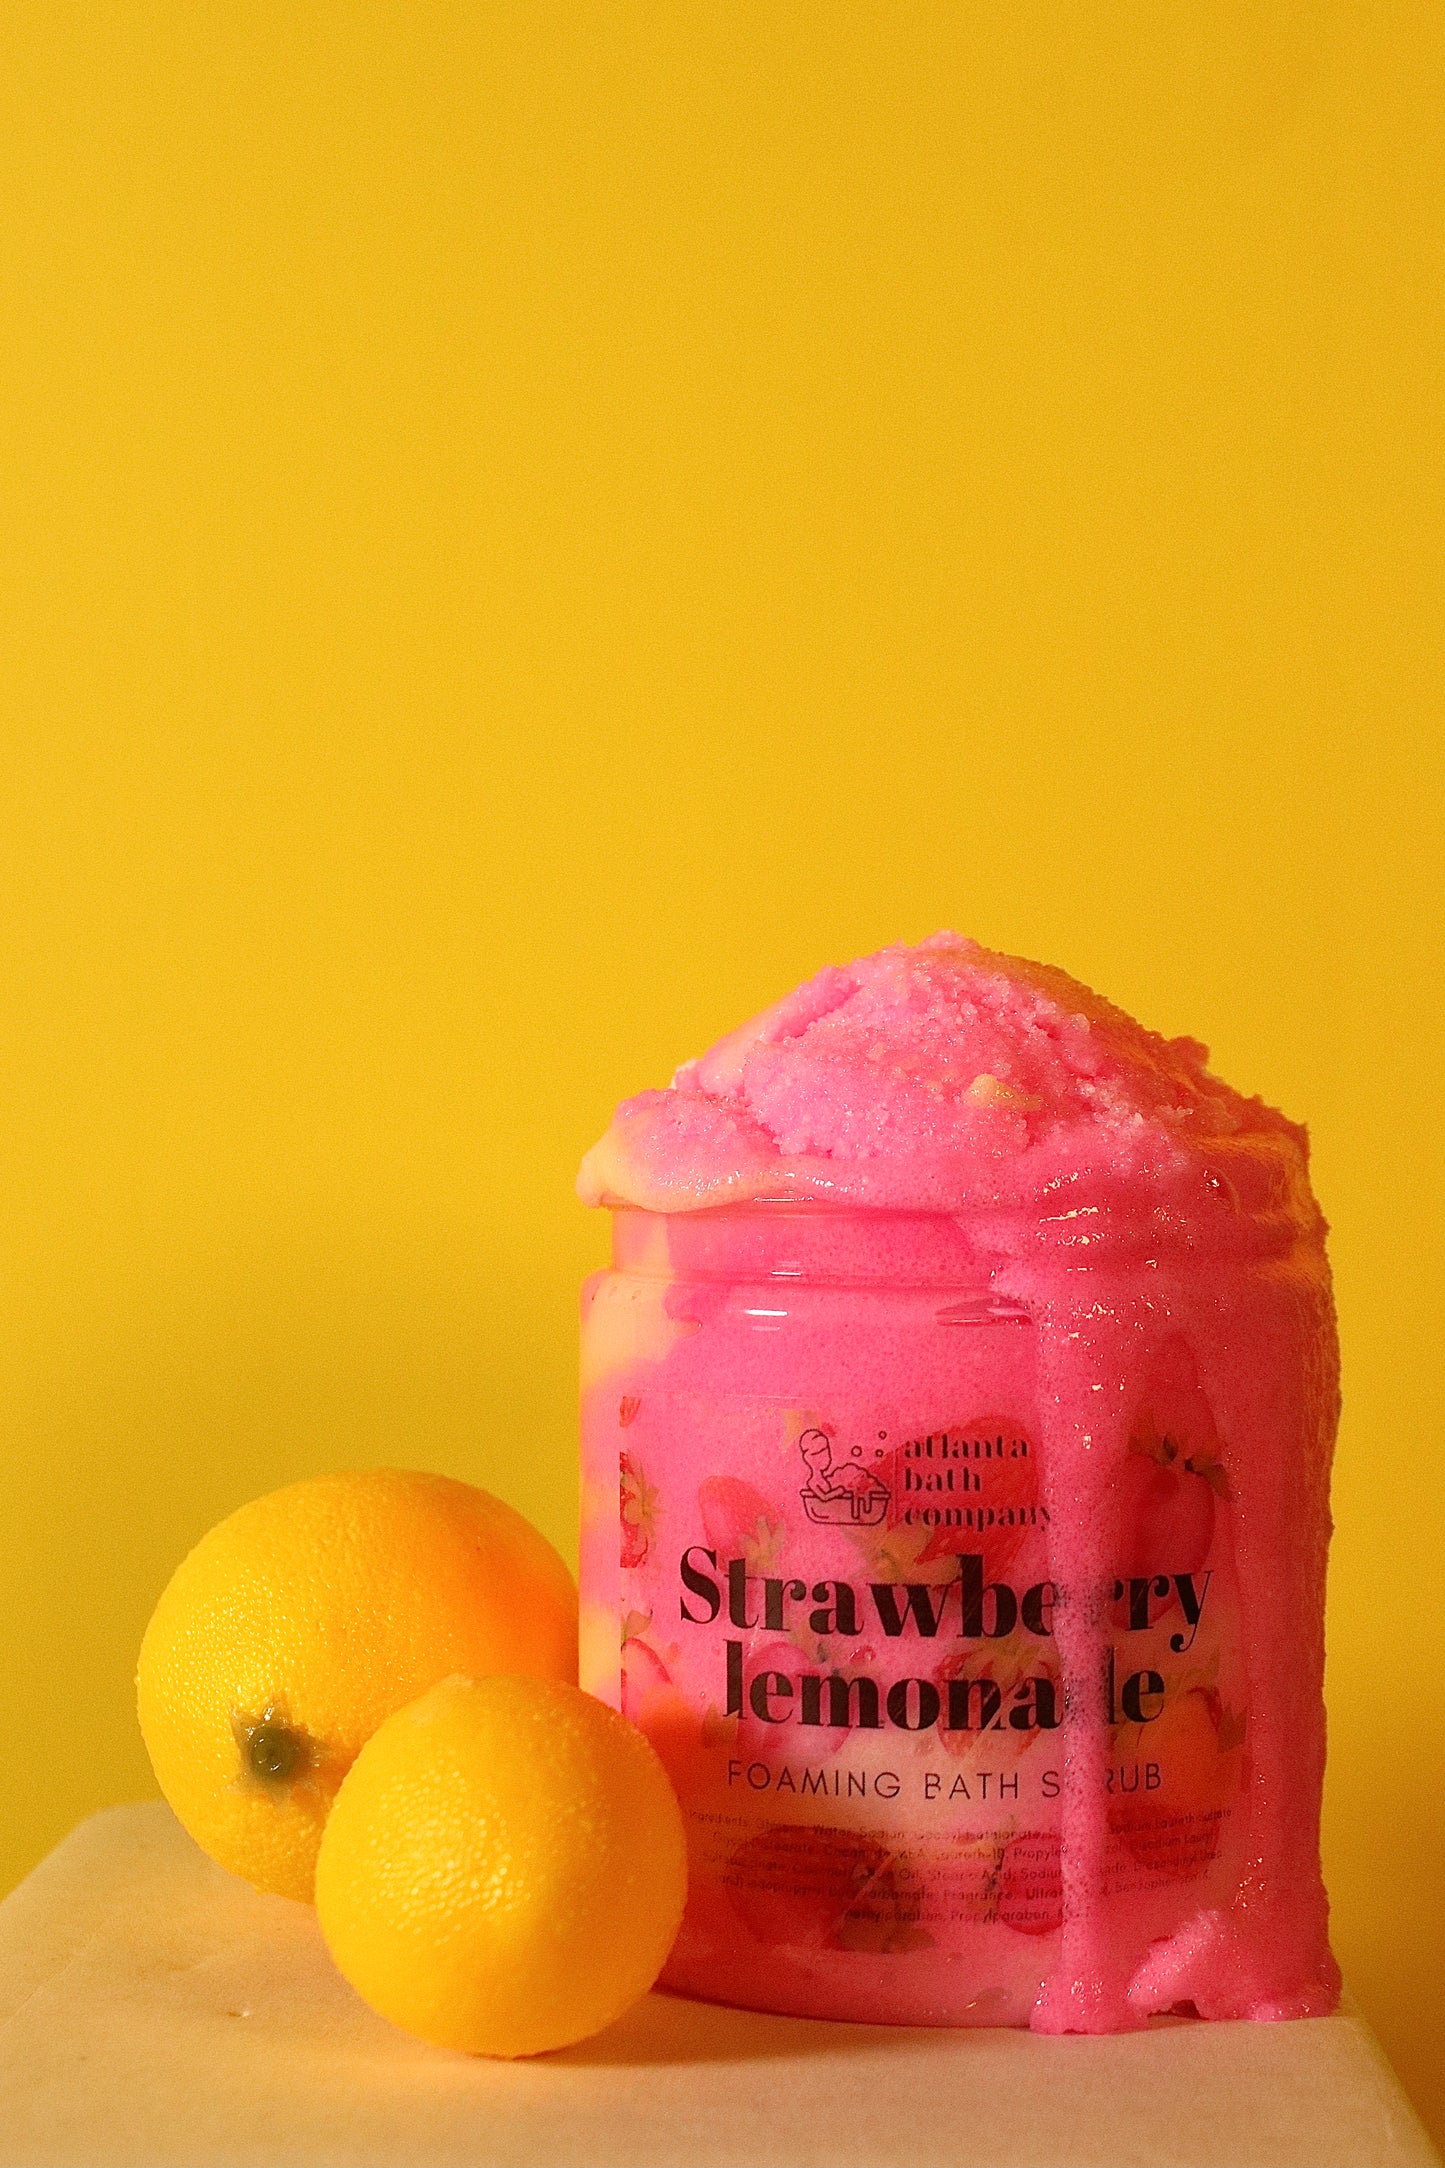 Strawberry Lemonade Sugar Scrub